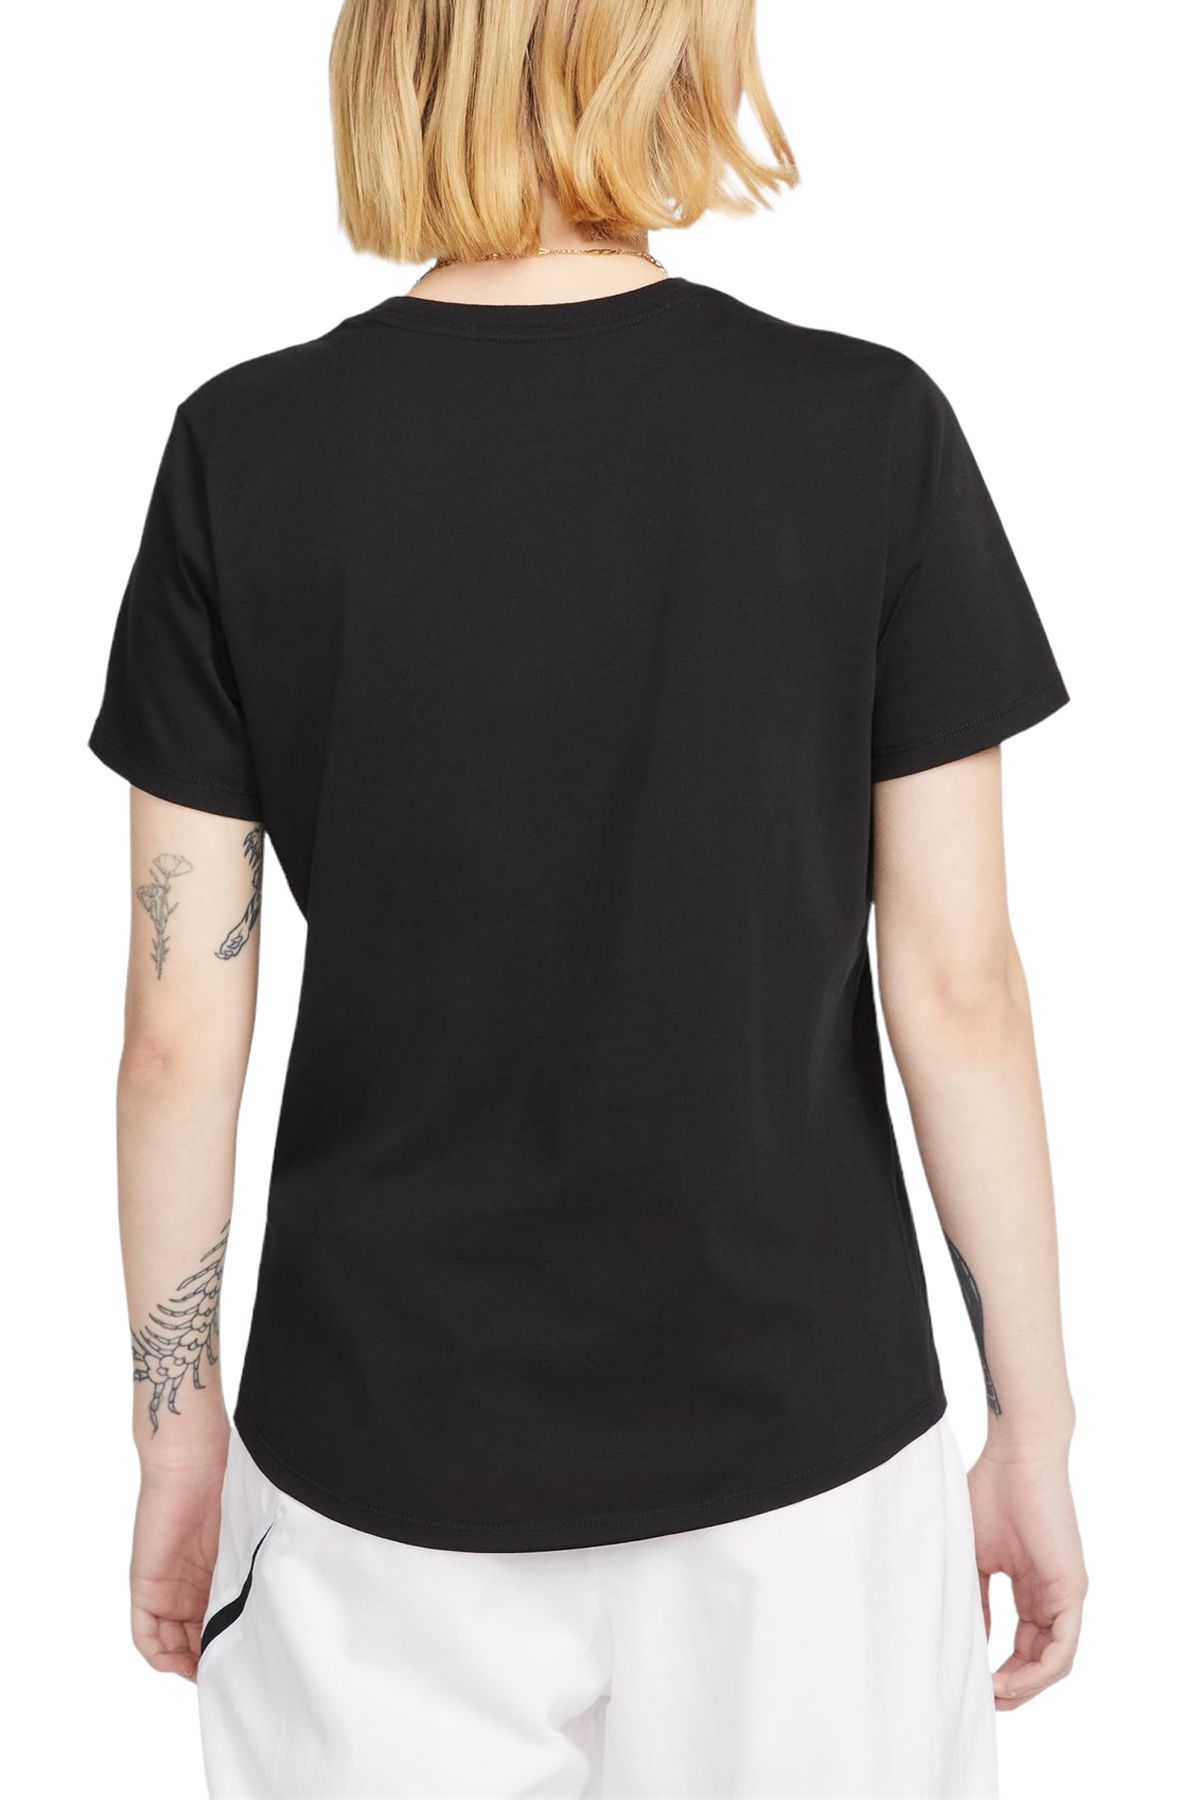 NIKE - Camiseta negra DX7902 010 Mujer